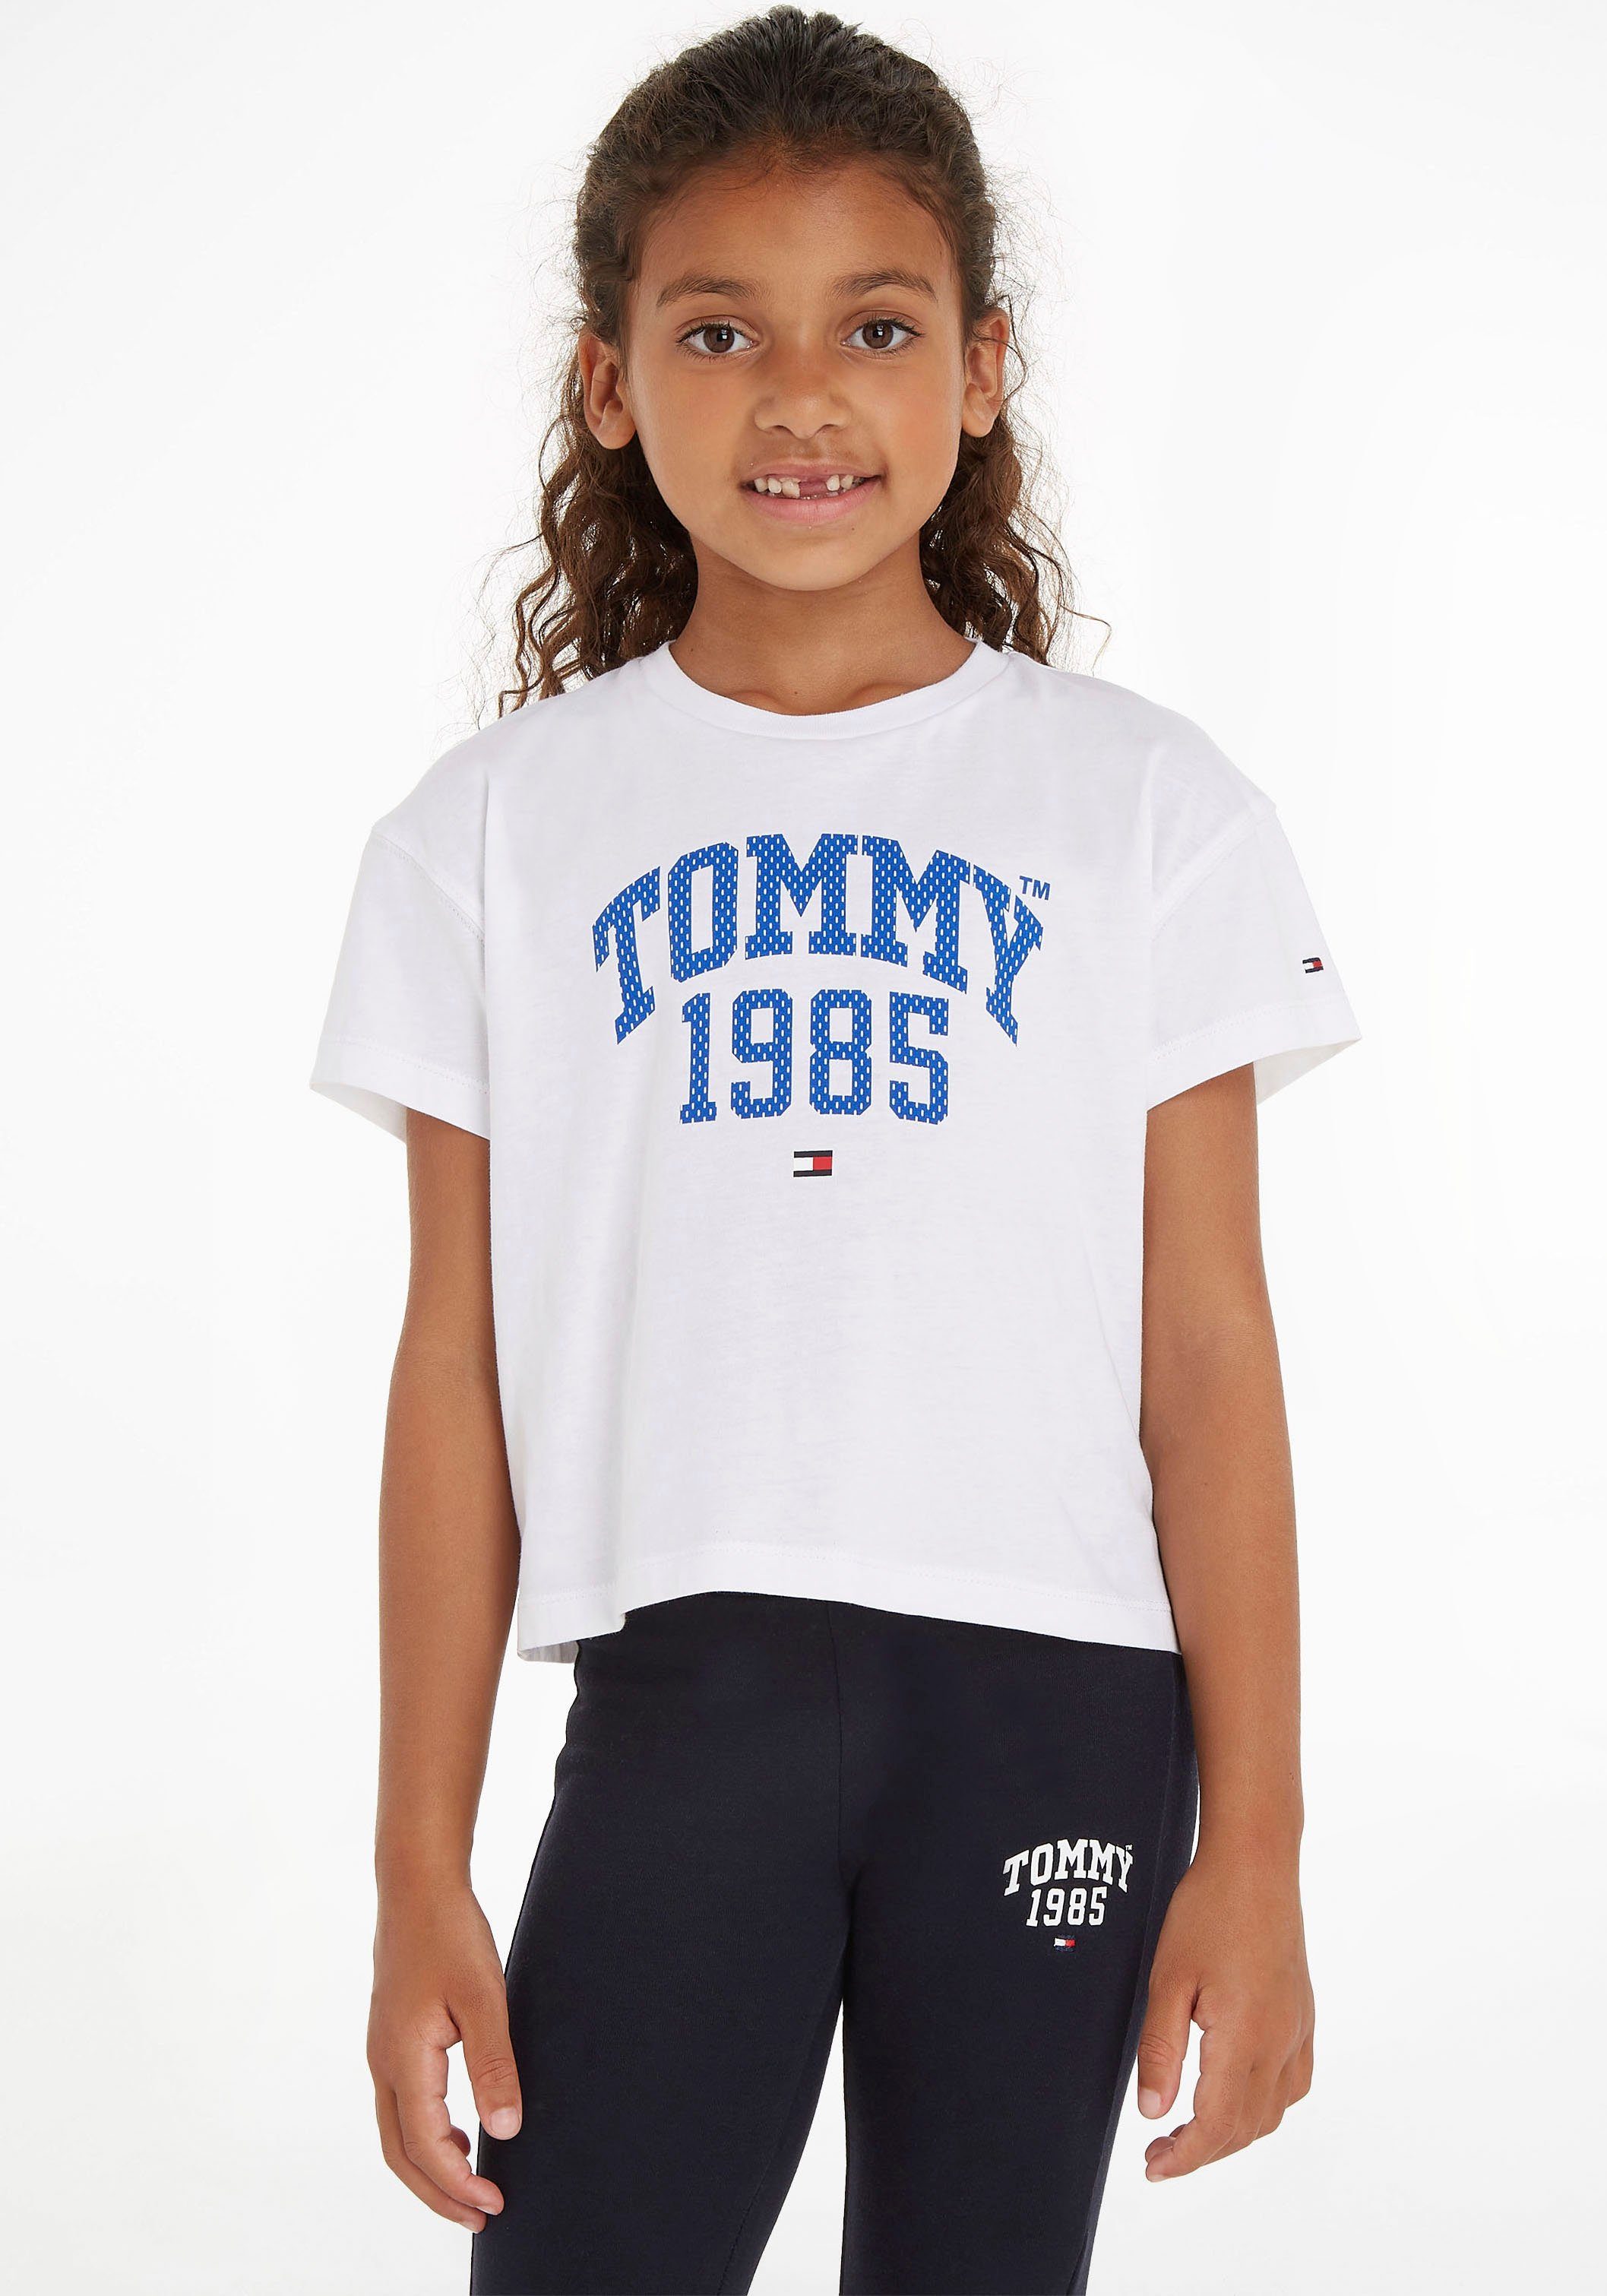 Tommy Hilfiger T-Shirt TOMMY VARSITY TEE S/S mit Print